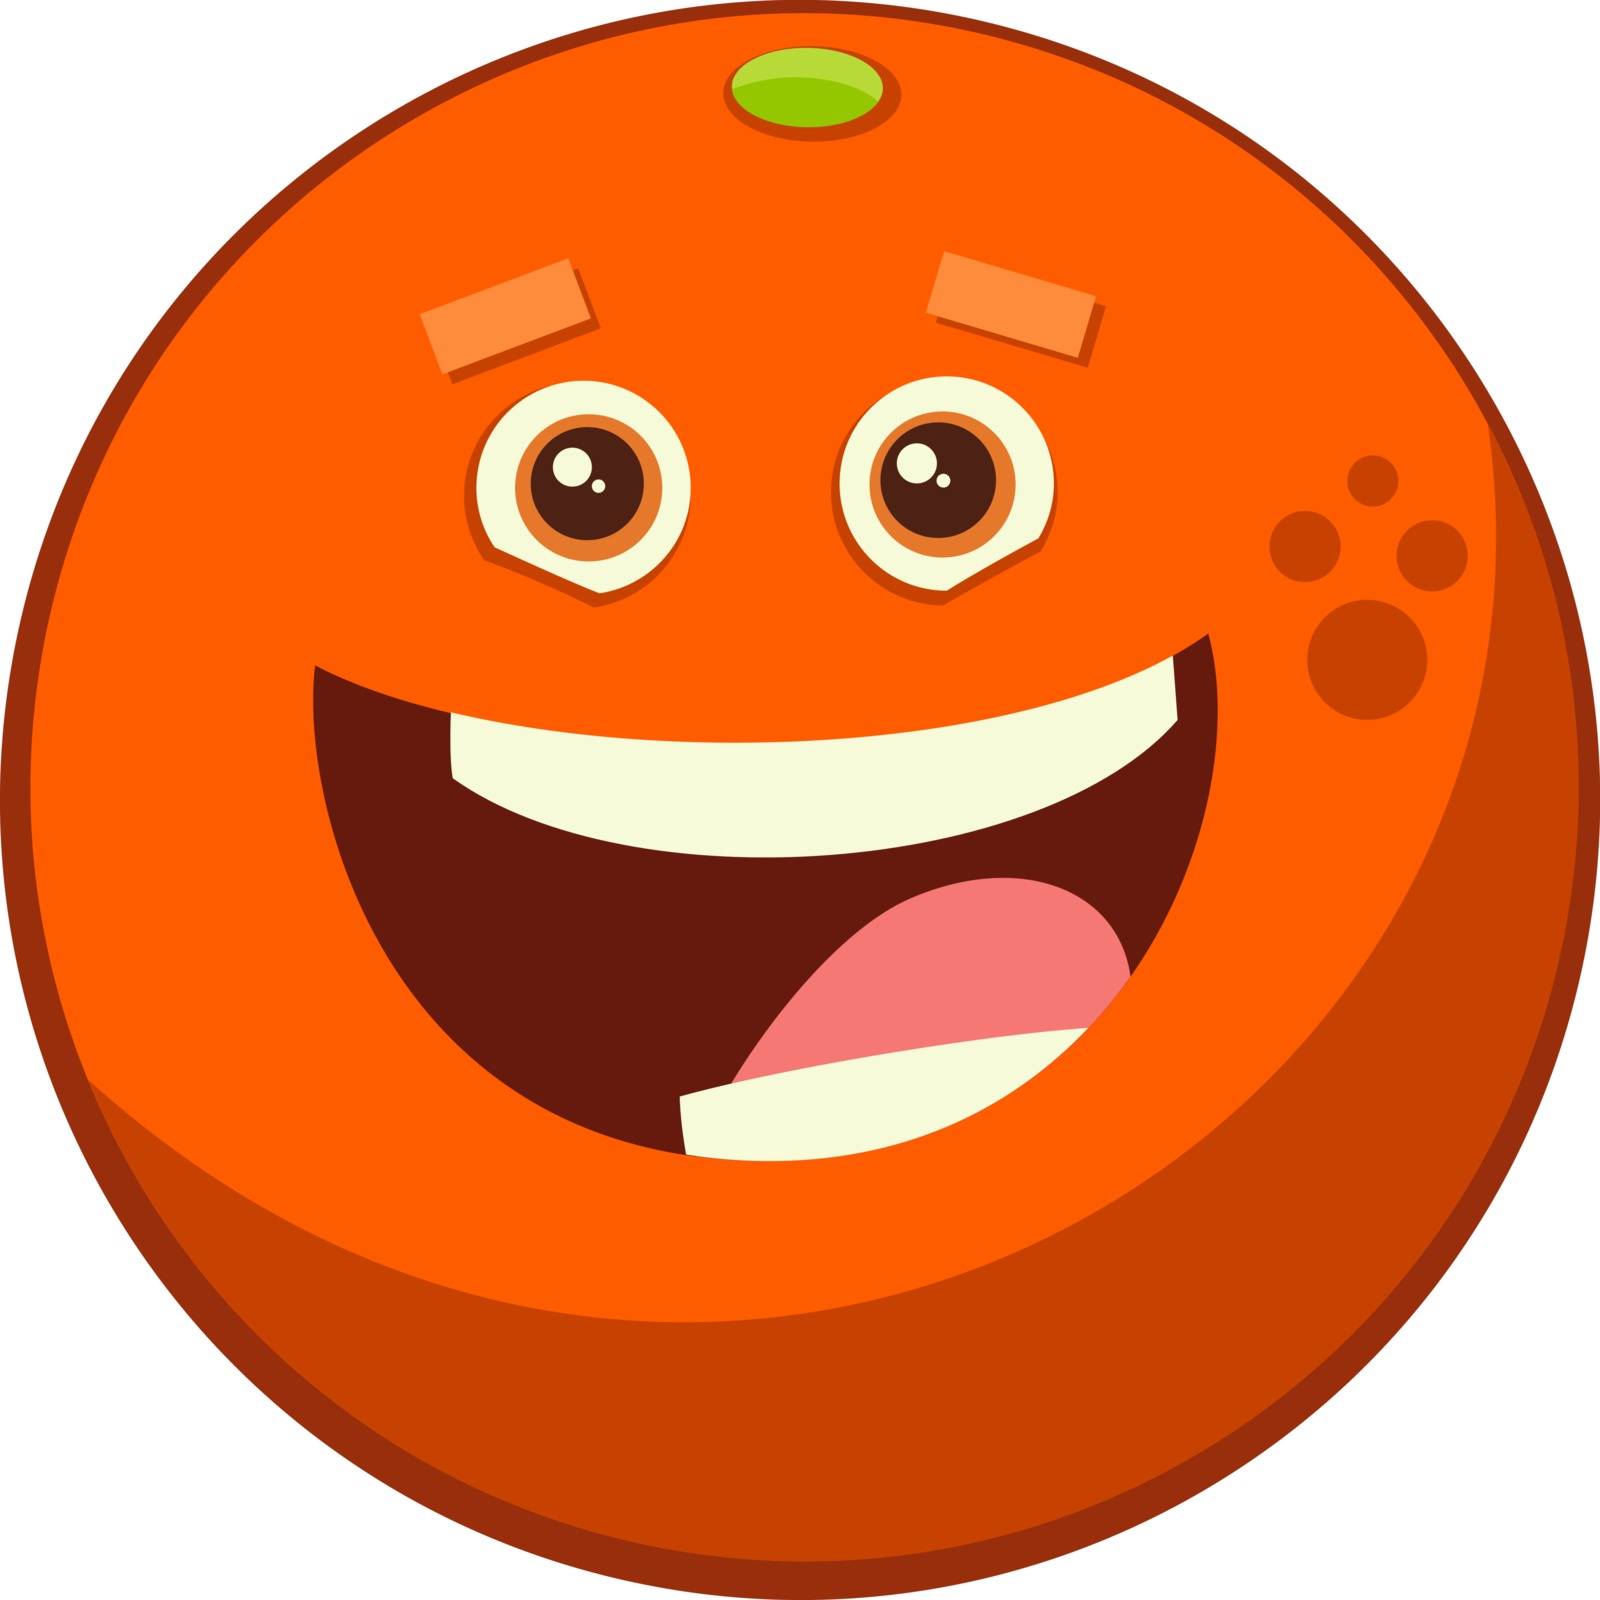 cartoon orange fruit character by izakowski